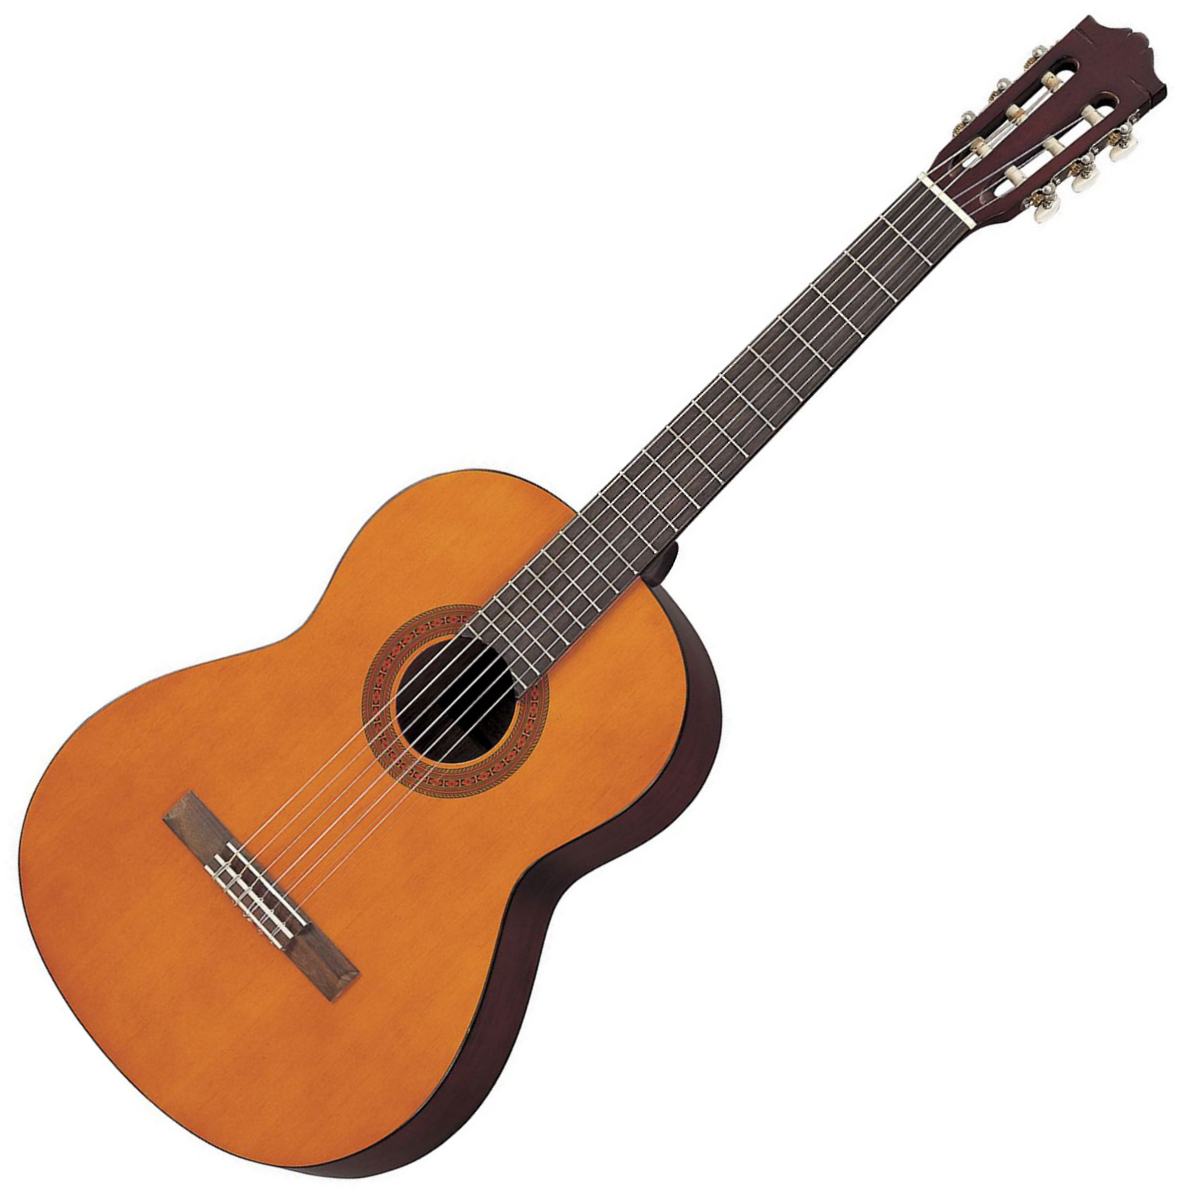 https://www.sonopro-discount.com/images/Image/Yamaha-C40II-Guitare-Classique-Nature-Guitare-tradit.png